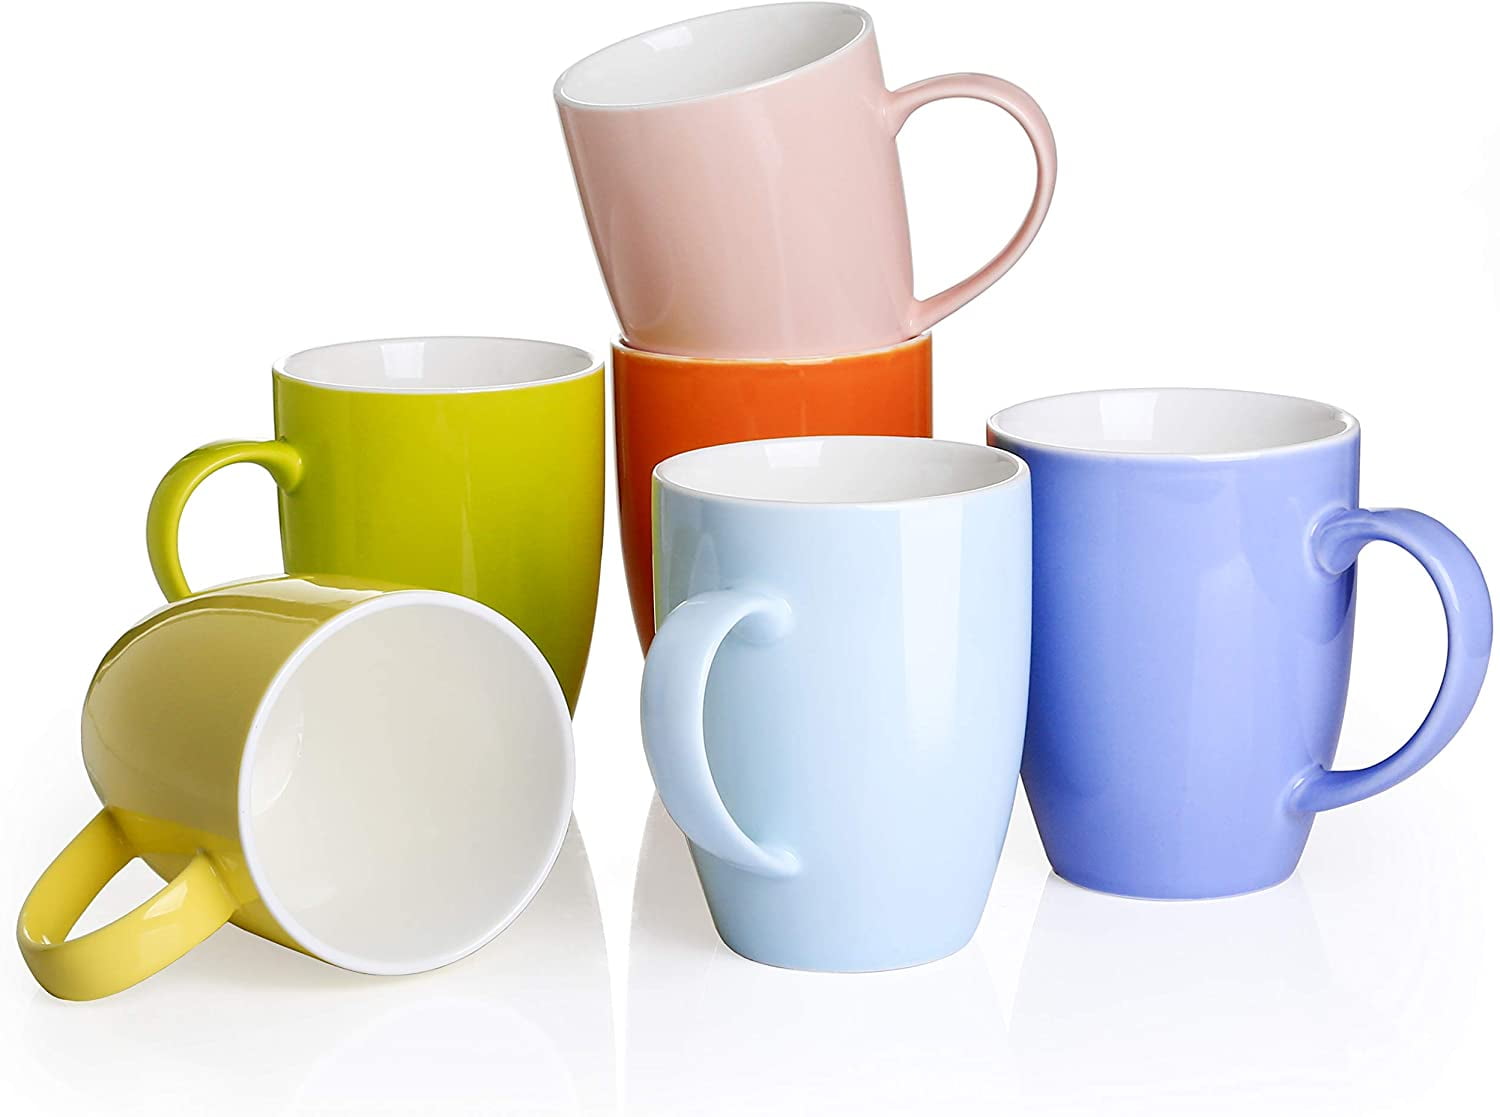 Snoopy The Perfect Friend Cute Funny Tea Coffee Mug Cup Ceramic 330ml